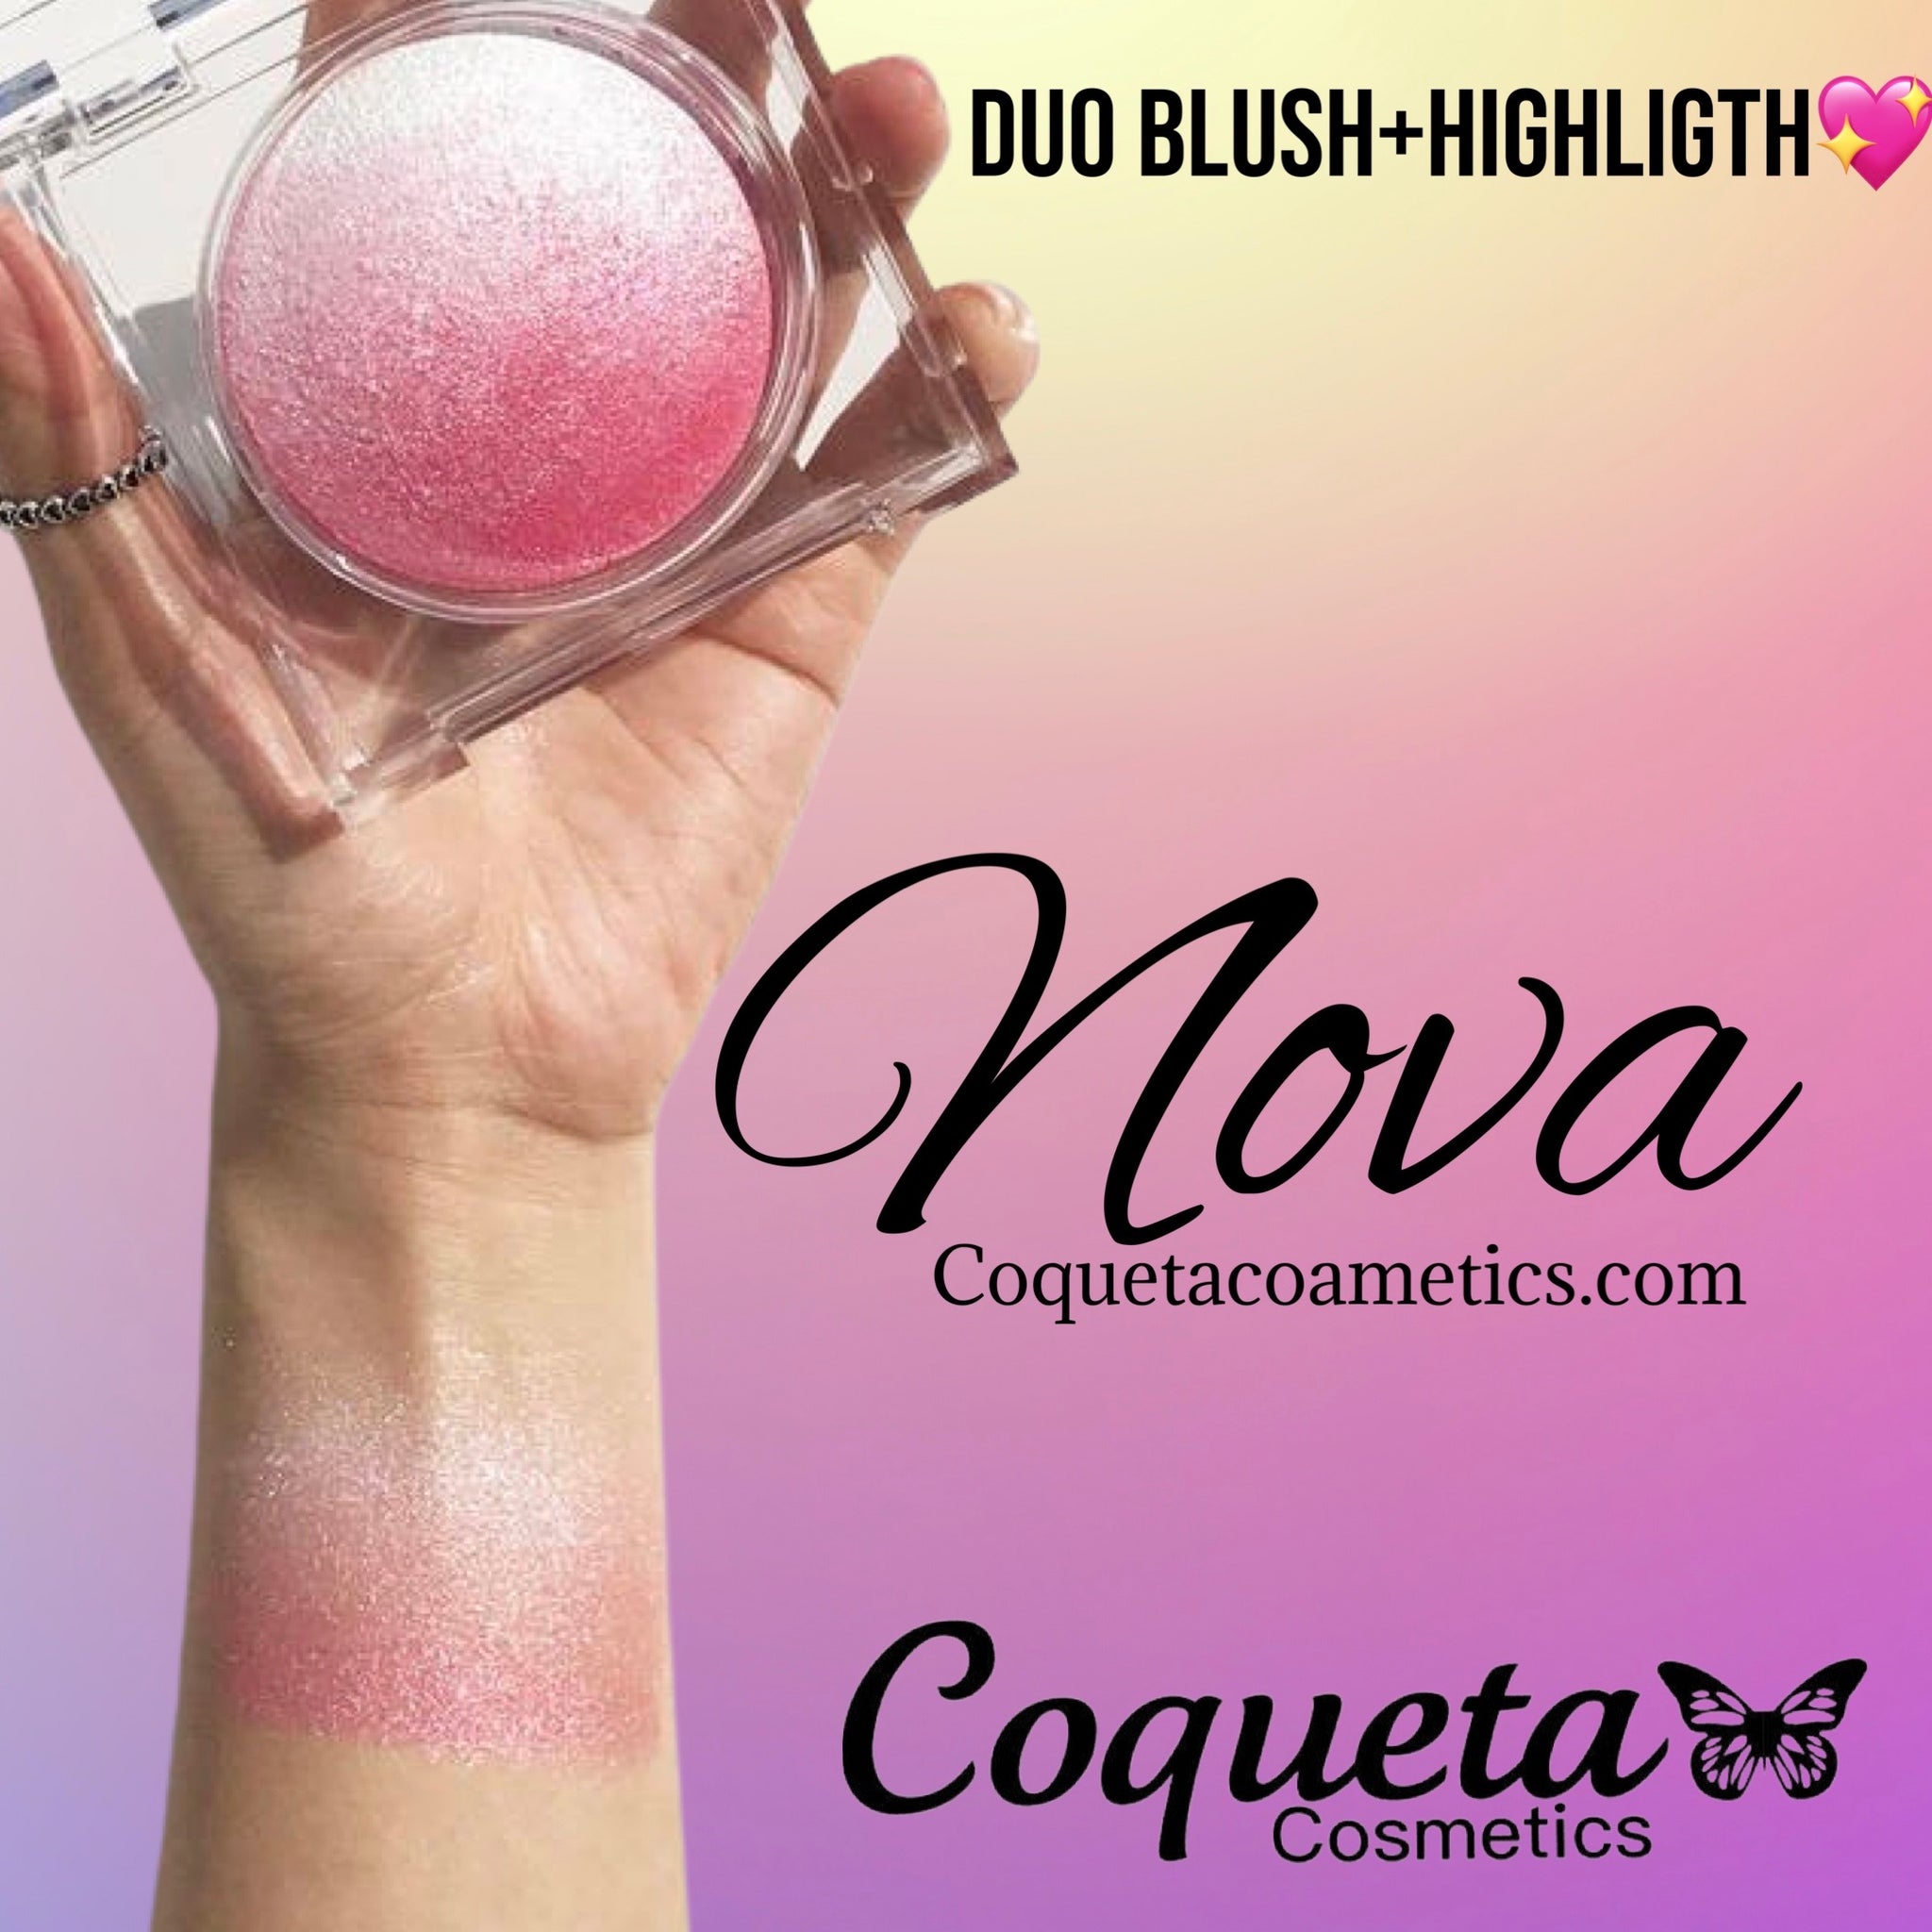 Nova (duo blush+ highlight)